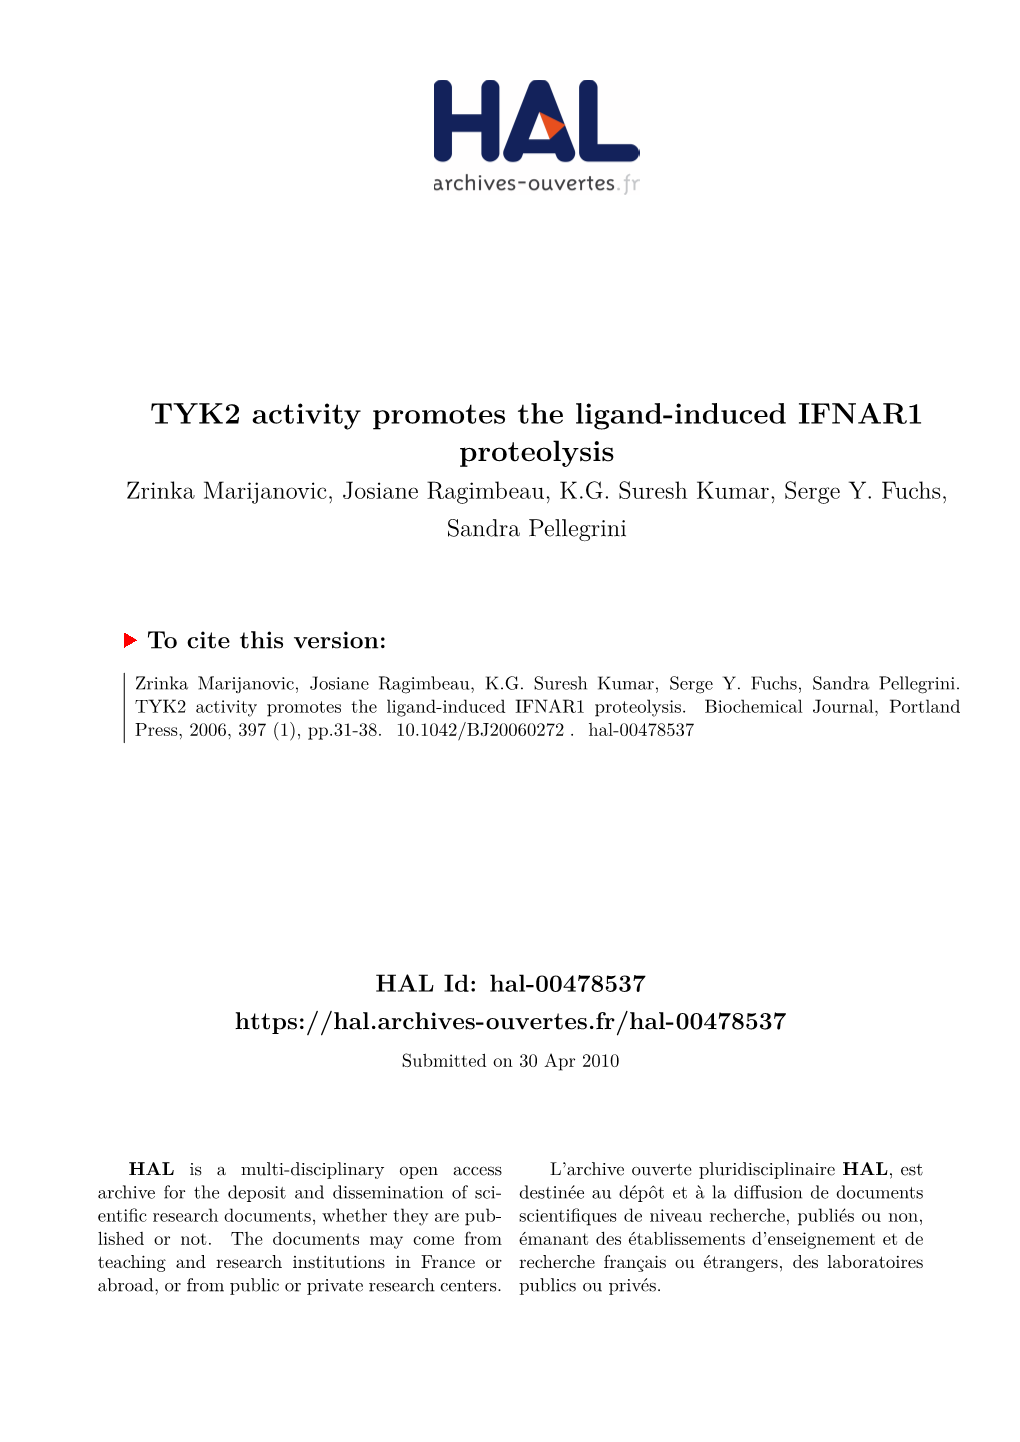 TYK2 Activity Promotes the Ligand-Induced IFNAR1 Proteolysis Zrinka Marijanovic, Josiane Ragimbeau, K.G